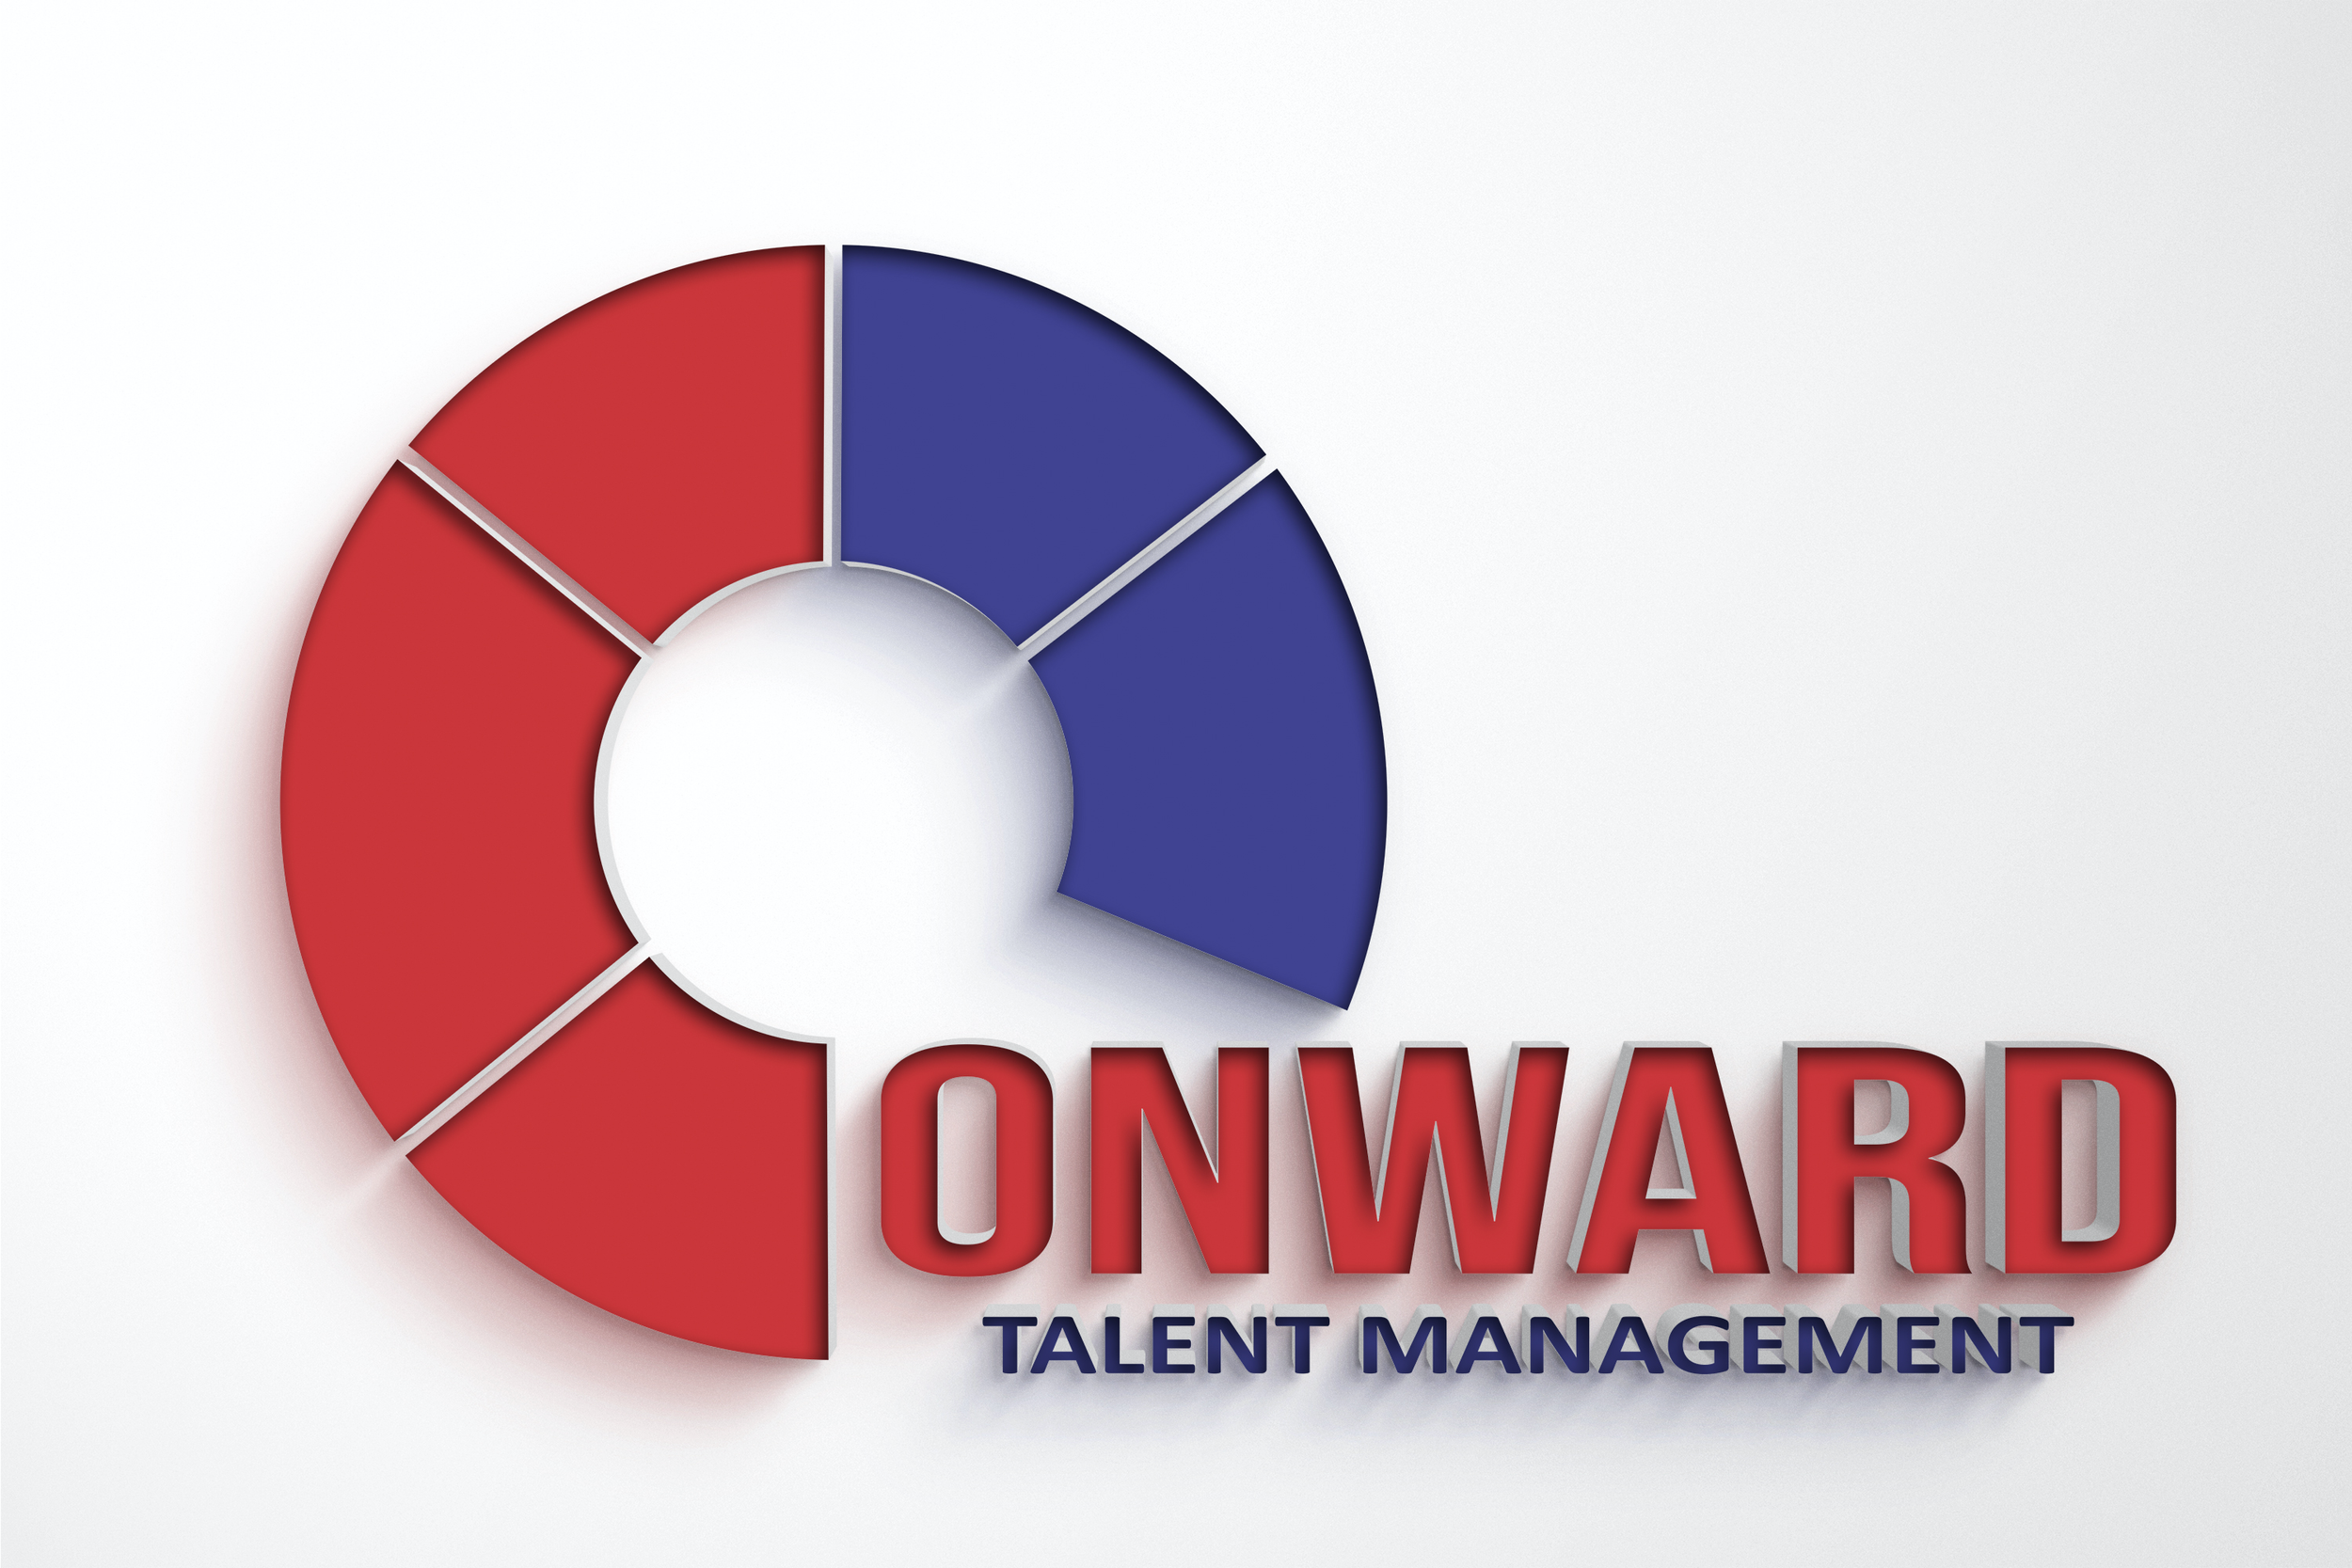 Onward Talent Management 3D logo.png